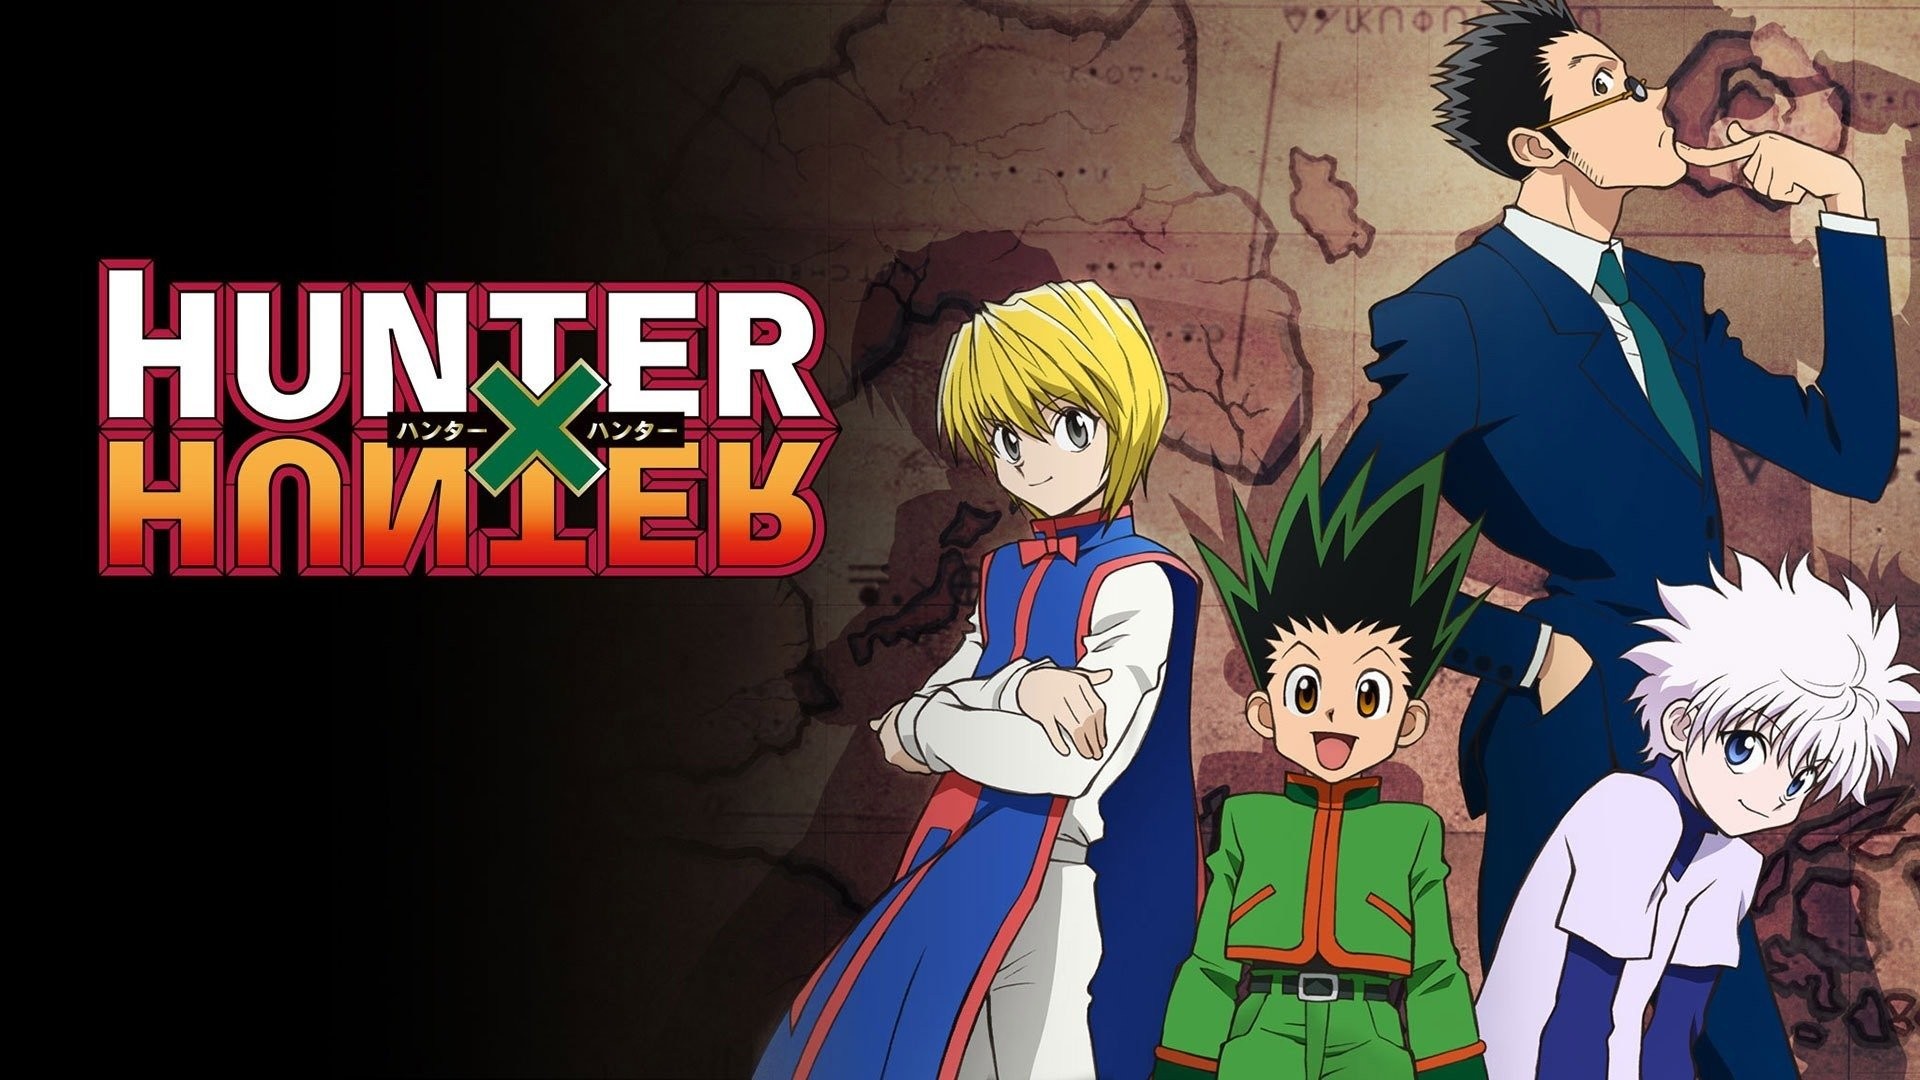 Hunter x Hunter 2011 Anime Slated for 45+ Episodes